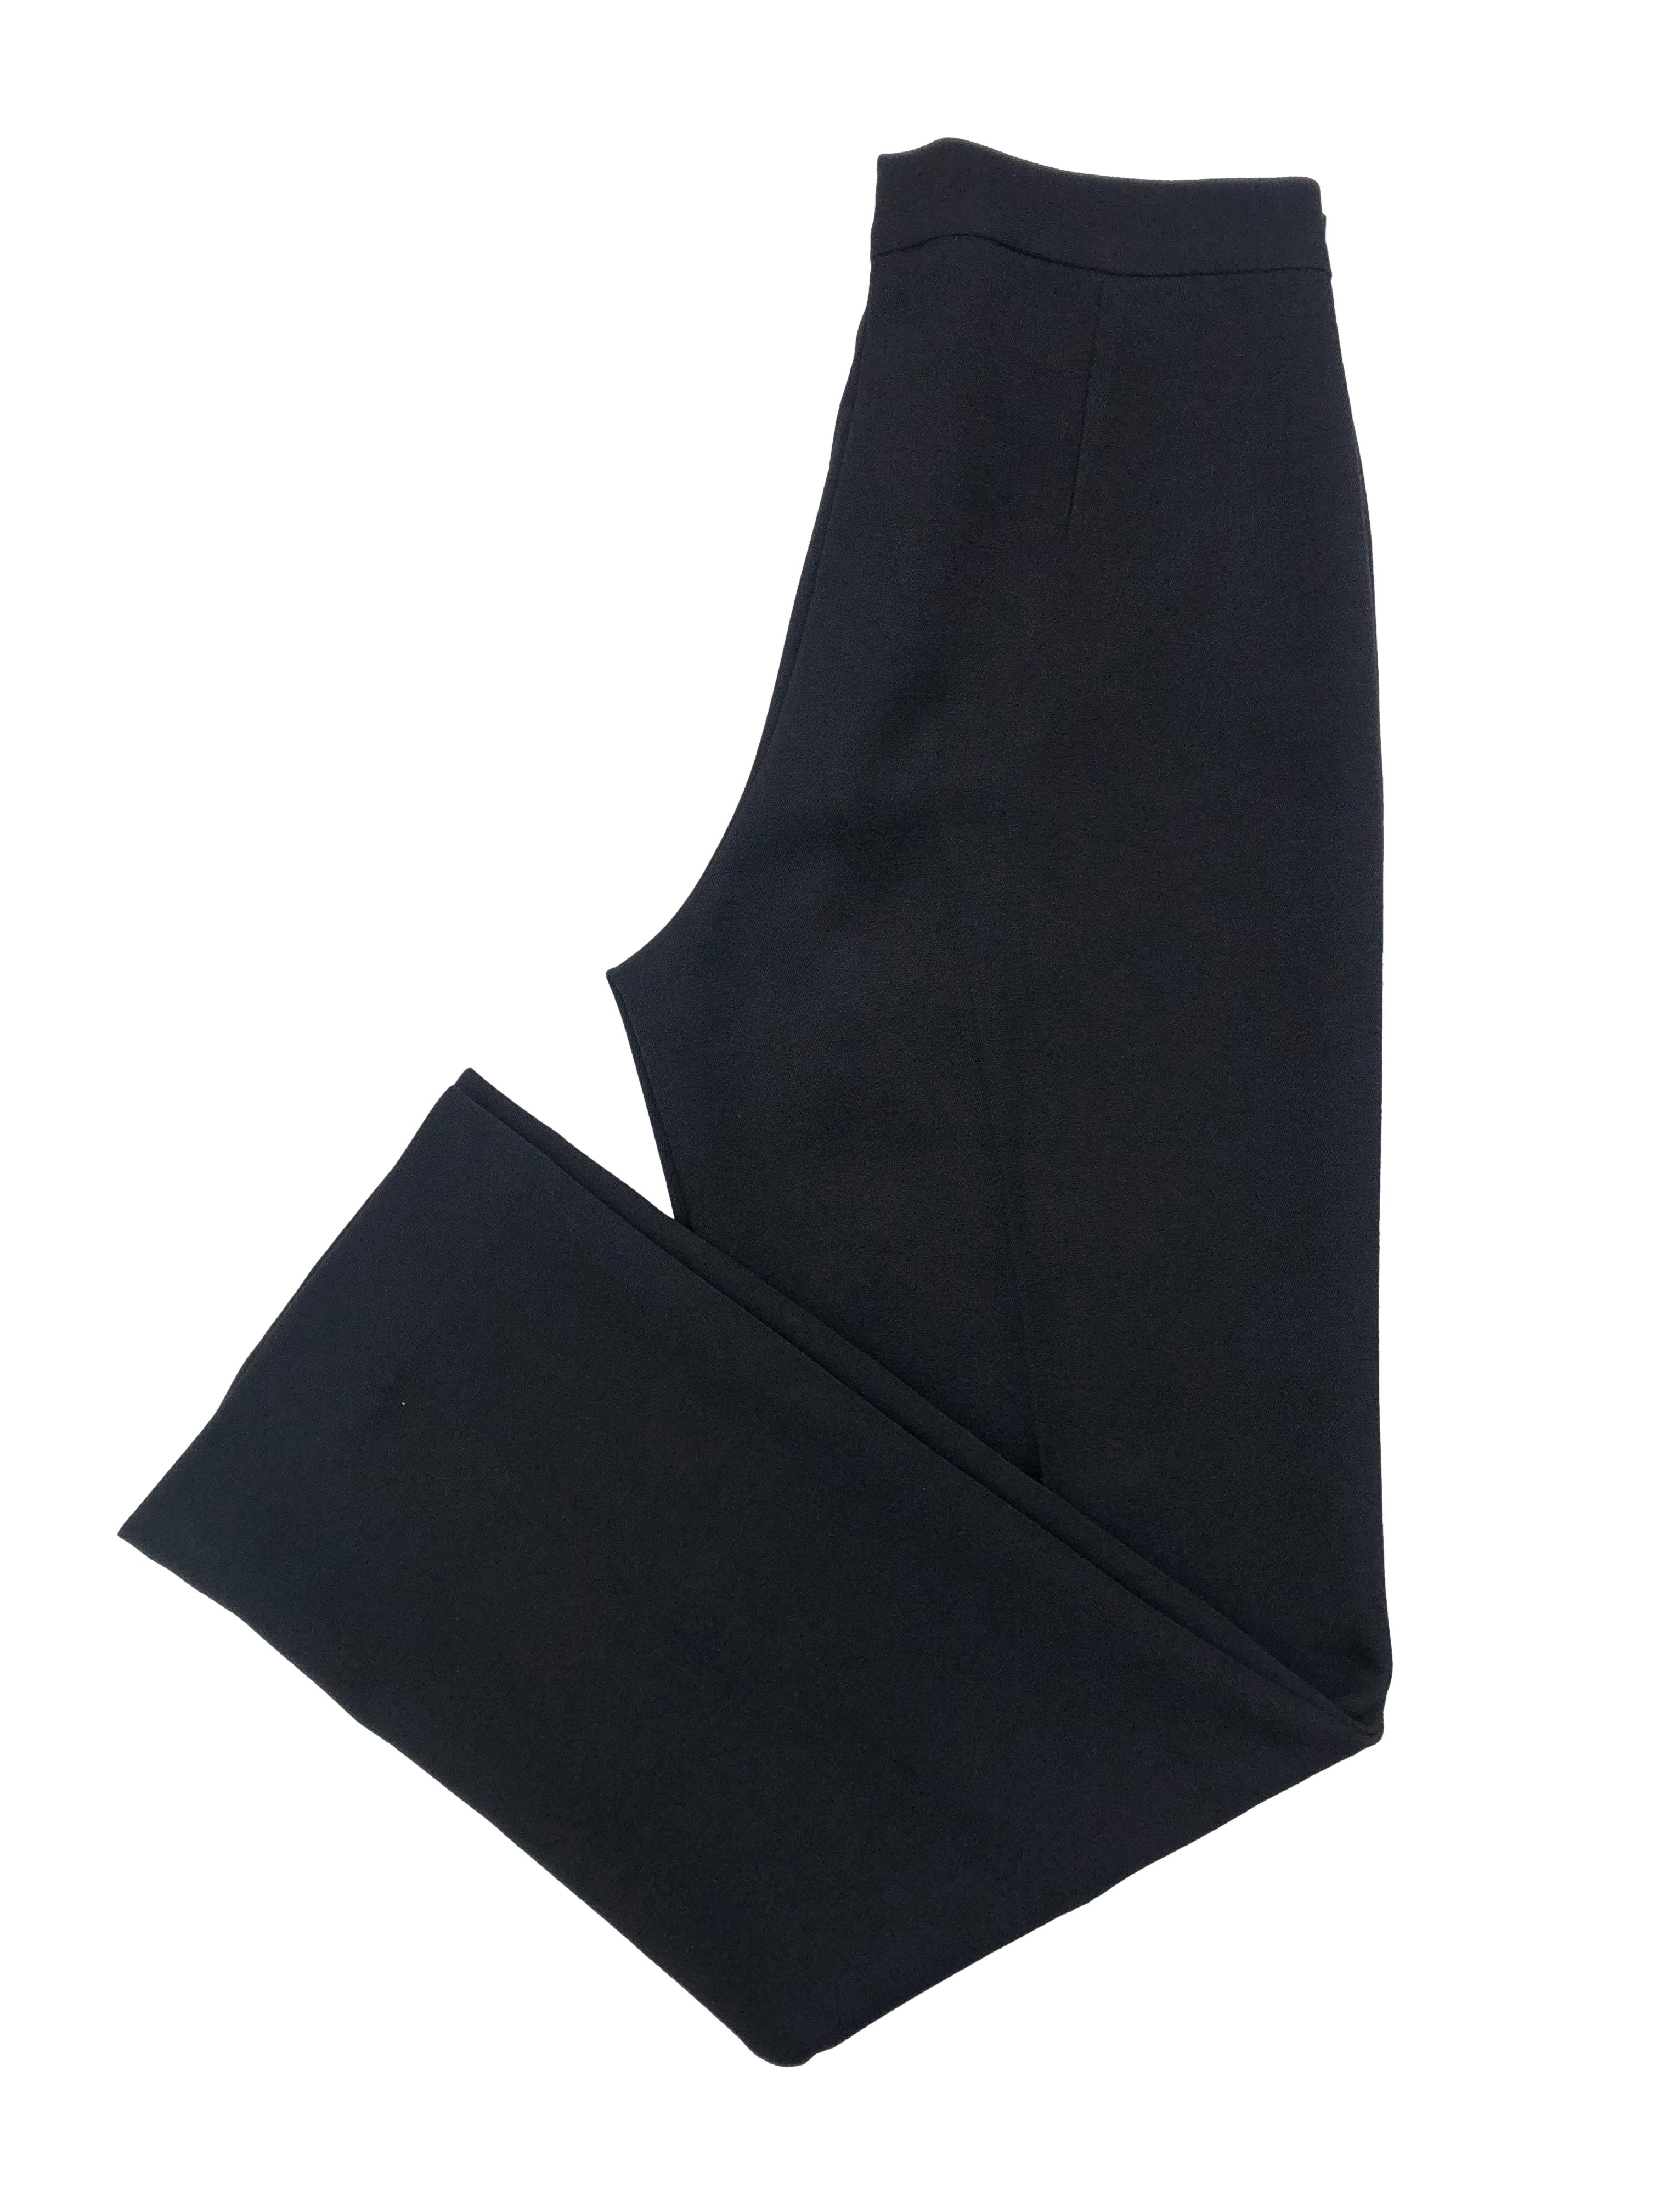 Pantalón formal negro con cierre botón y bolsillos secreto delantero, corte slim. Cintura 72cm Tiro 28cm Largo 98cm